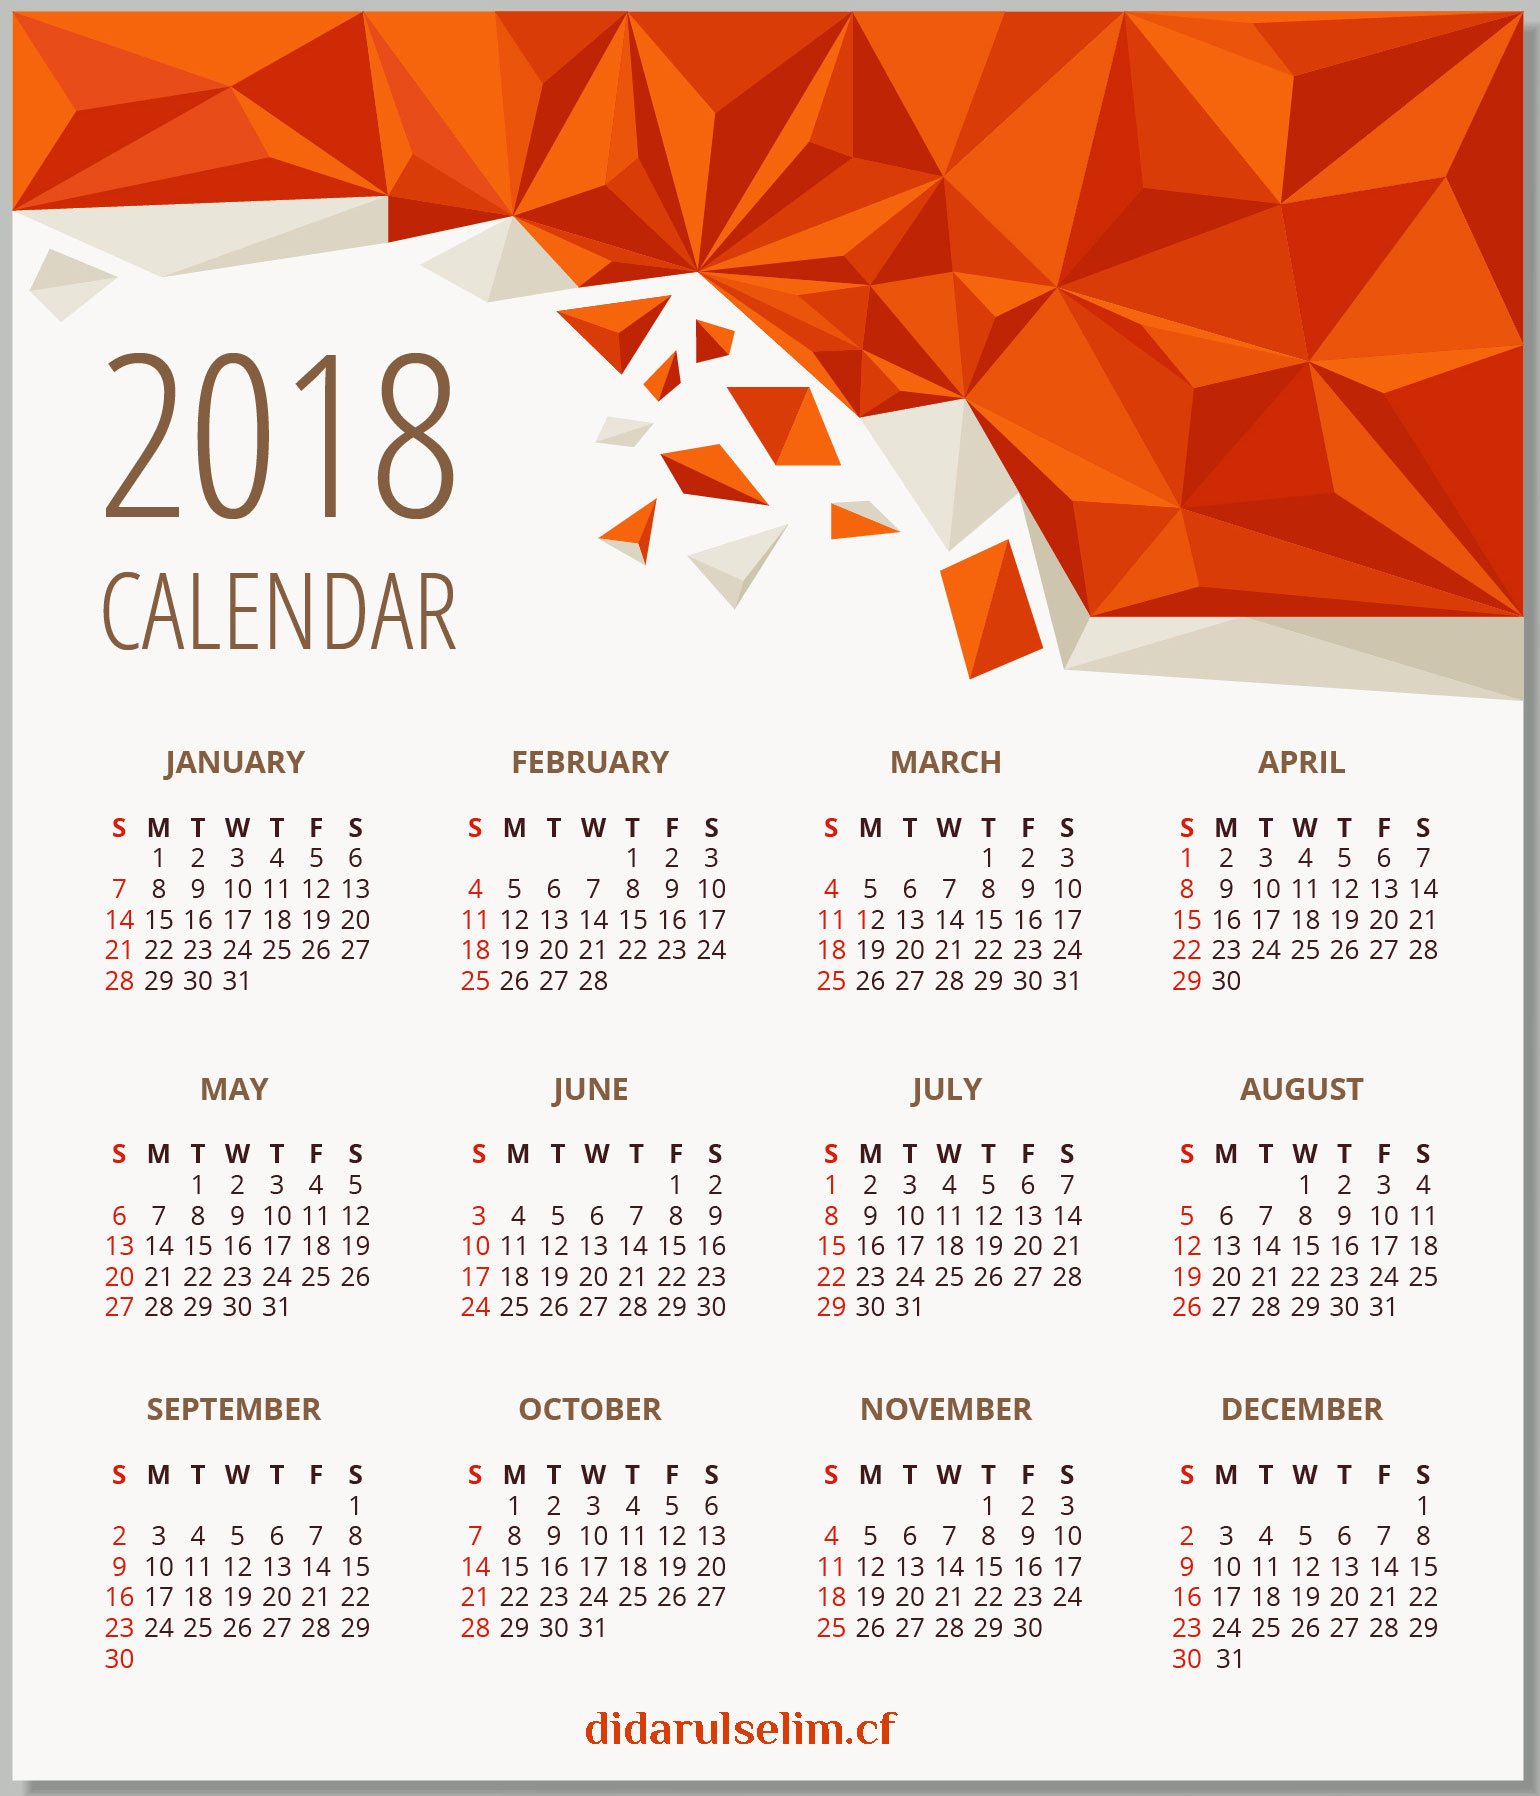 HAPPY NEW YEAR CALENDARS Do you love any calendar of 2018